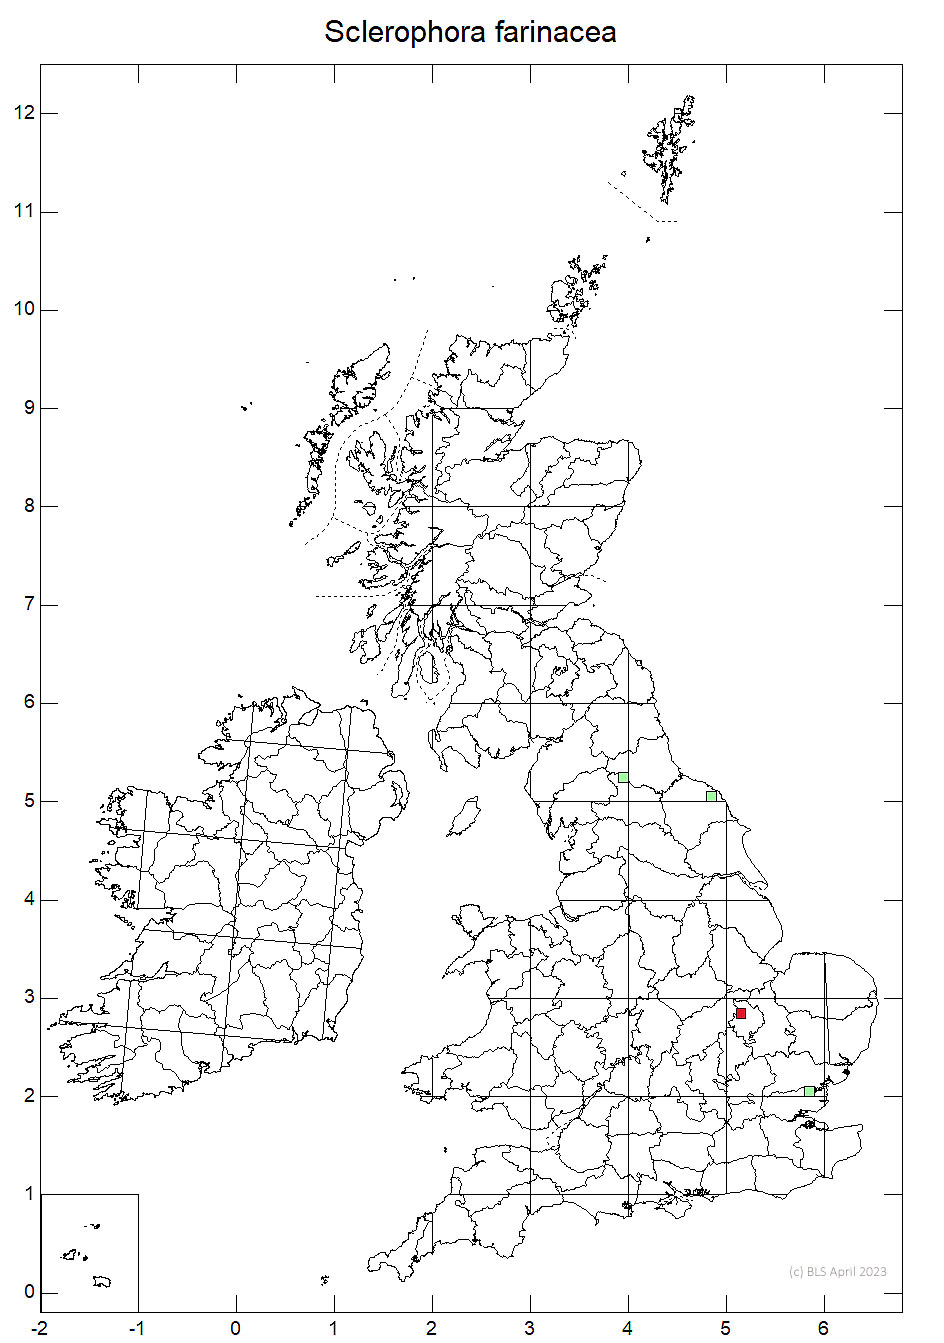 Sclerophora farinacea 10km sq distribution map